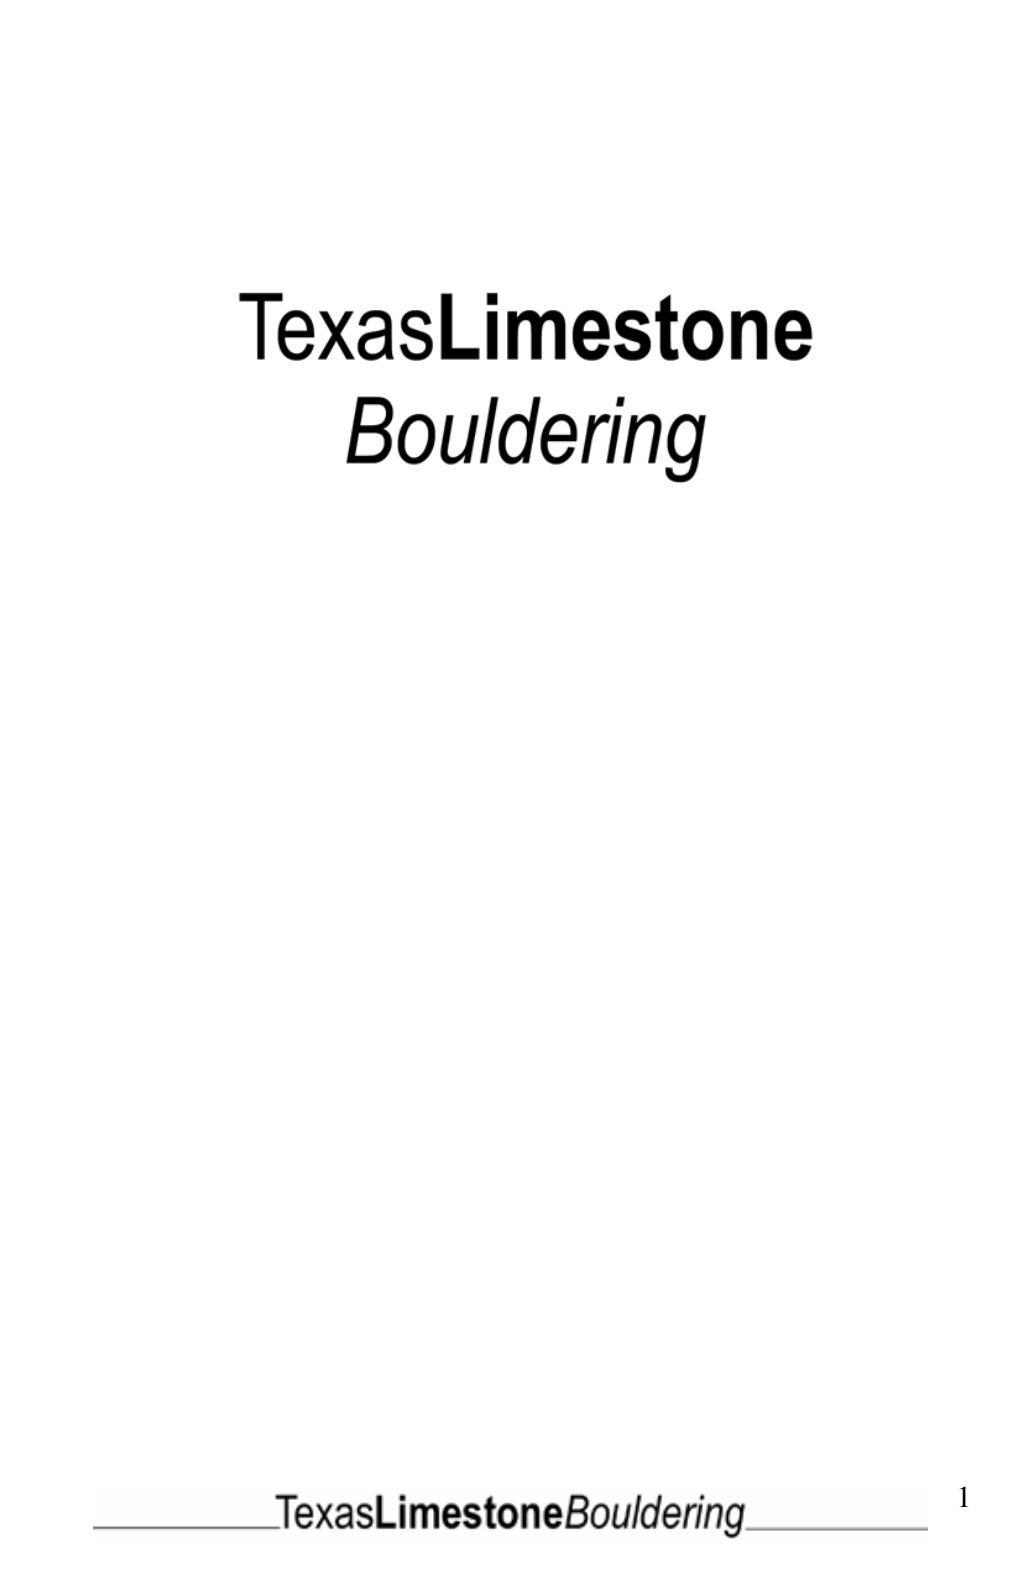 Texas Limestone Bouldering